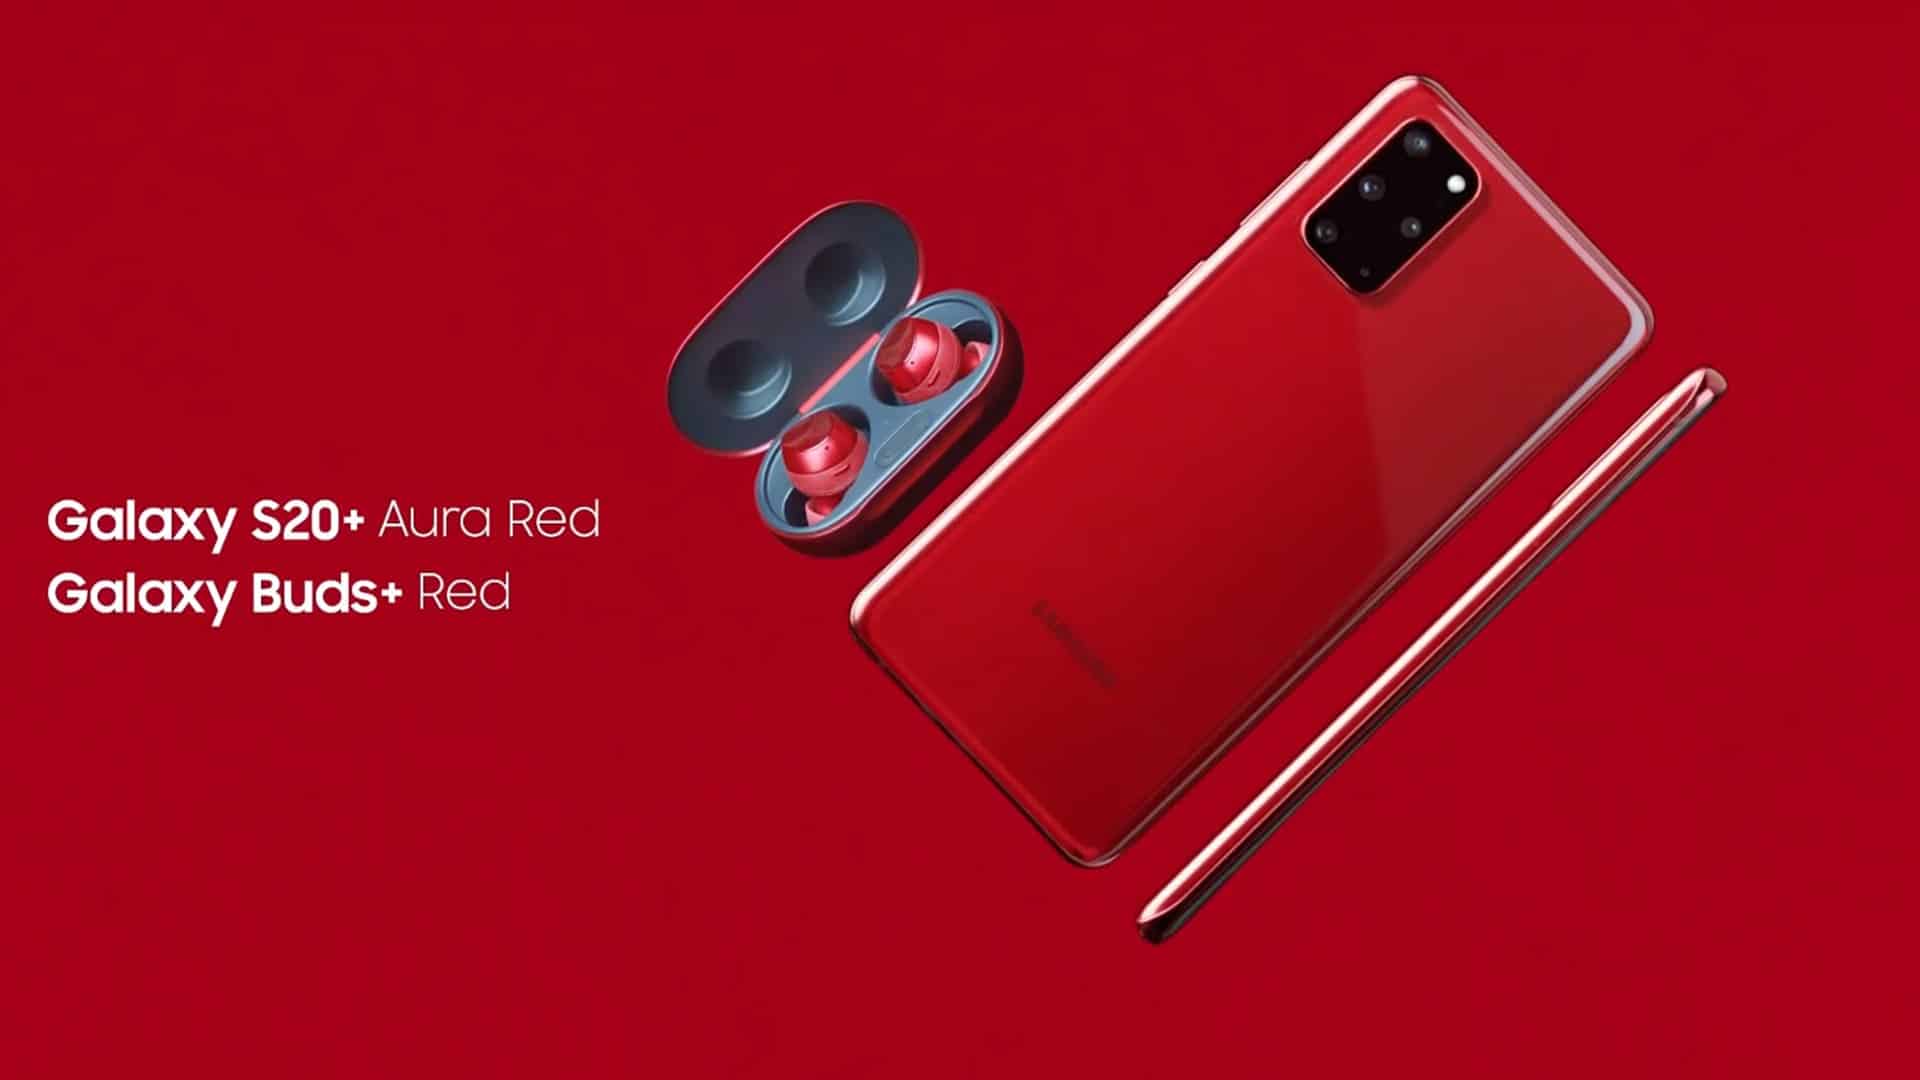 https://www.gizchina.com/wp-content/uploads/images/2020/05/Samsung-Galaxy-S20-Plus-Aura-Red.jpg